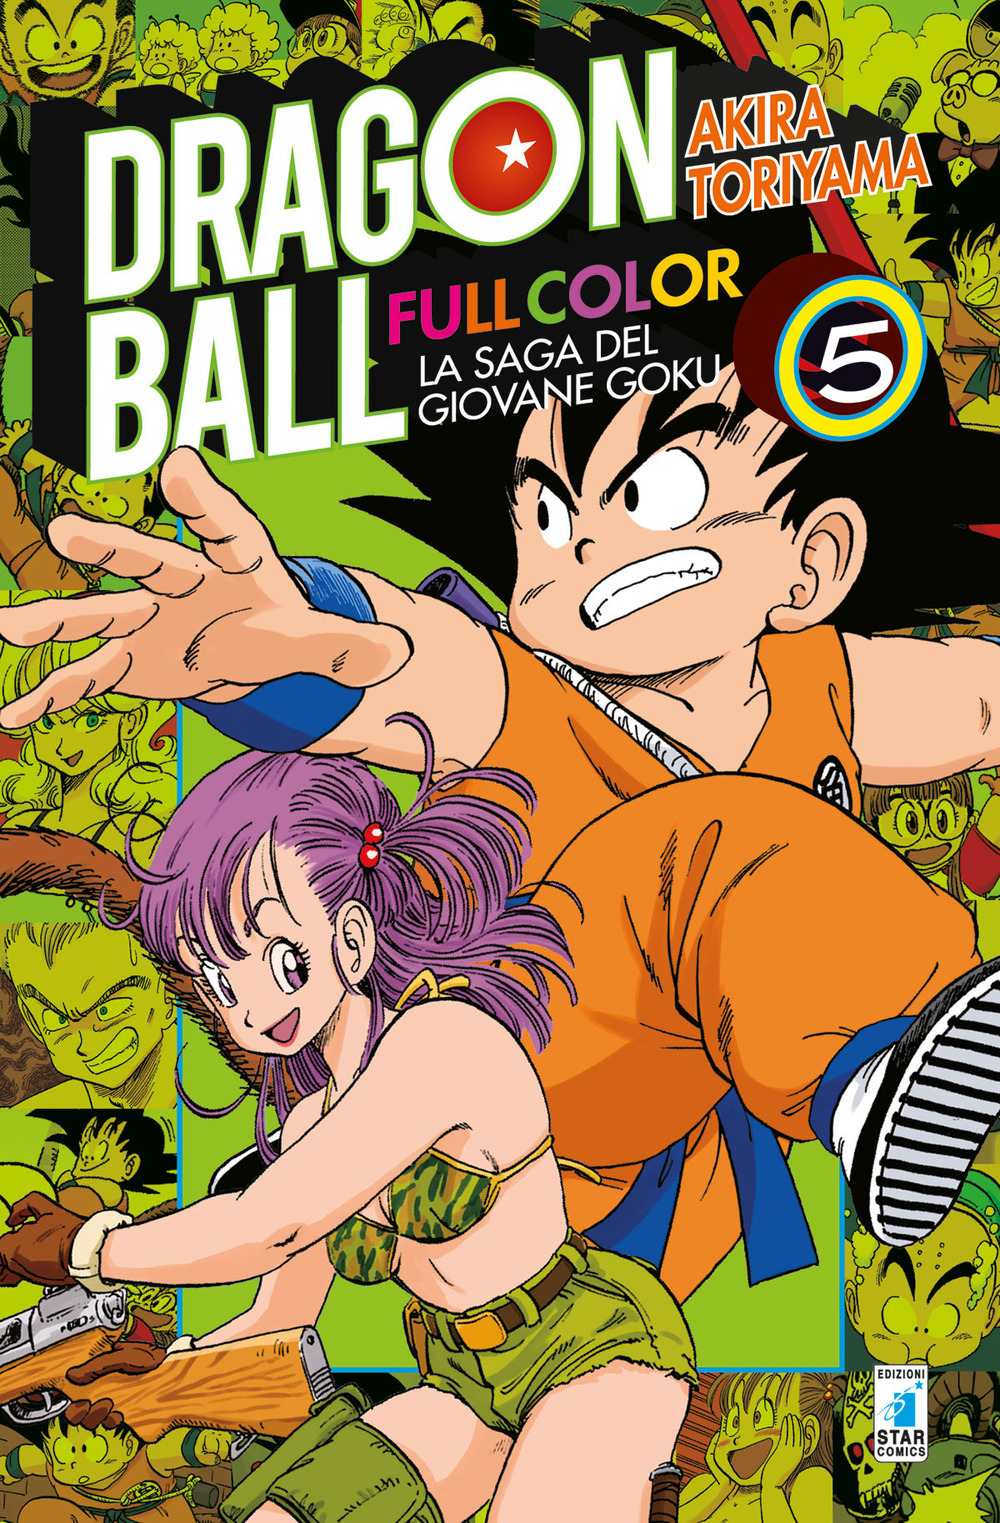 La saga del giovane Goku. Dragon Ball full color. Vol. 5